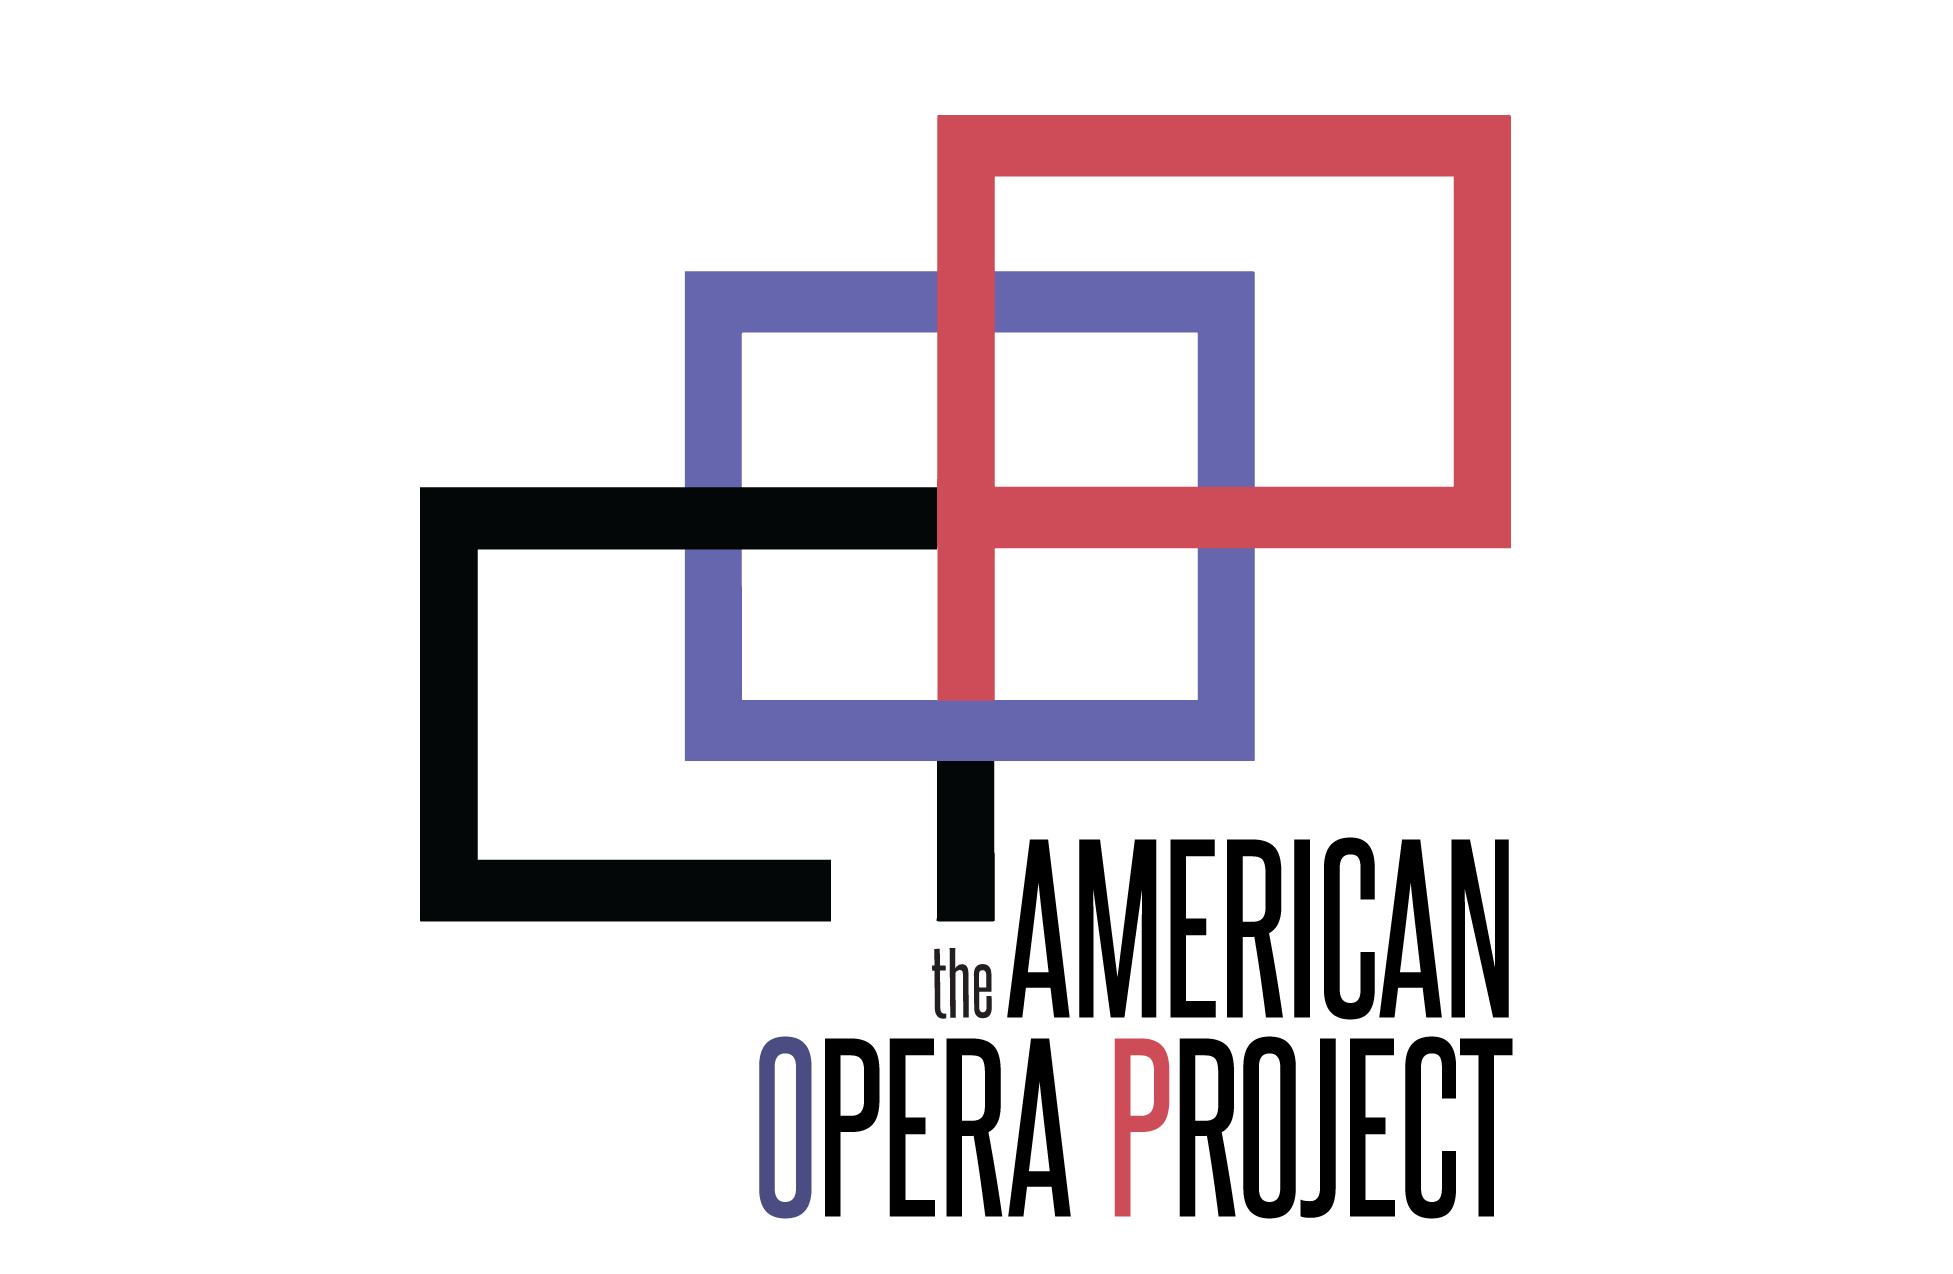 The American Opera Project logo